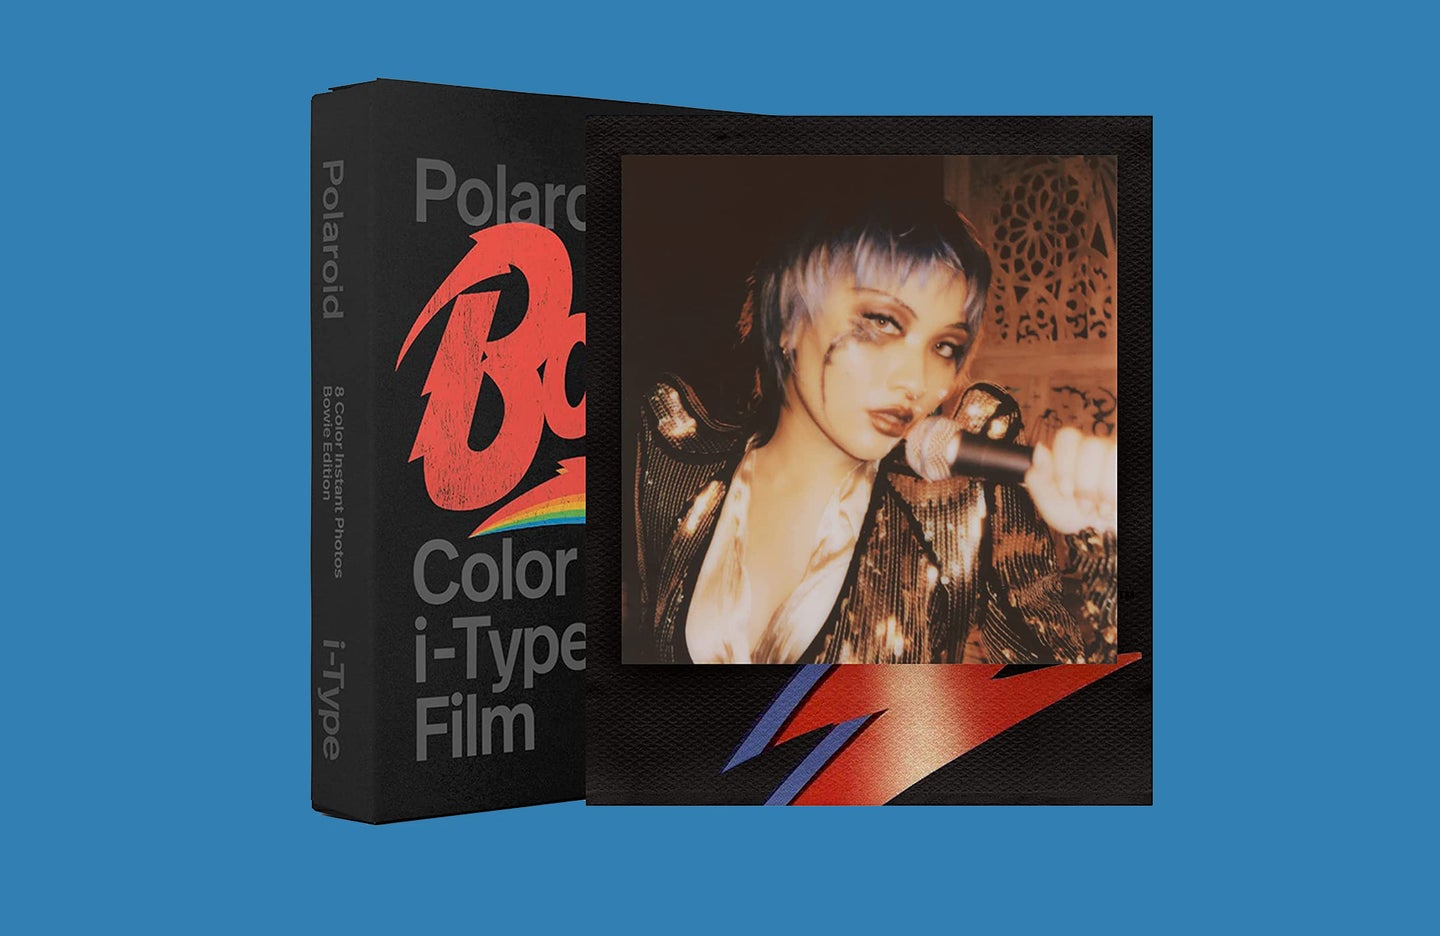 Polaroid Color I-Type Film - David Bowie Edition